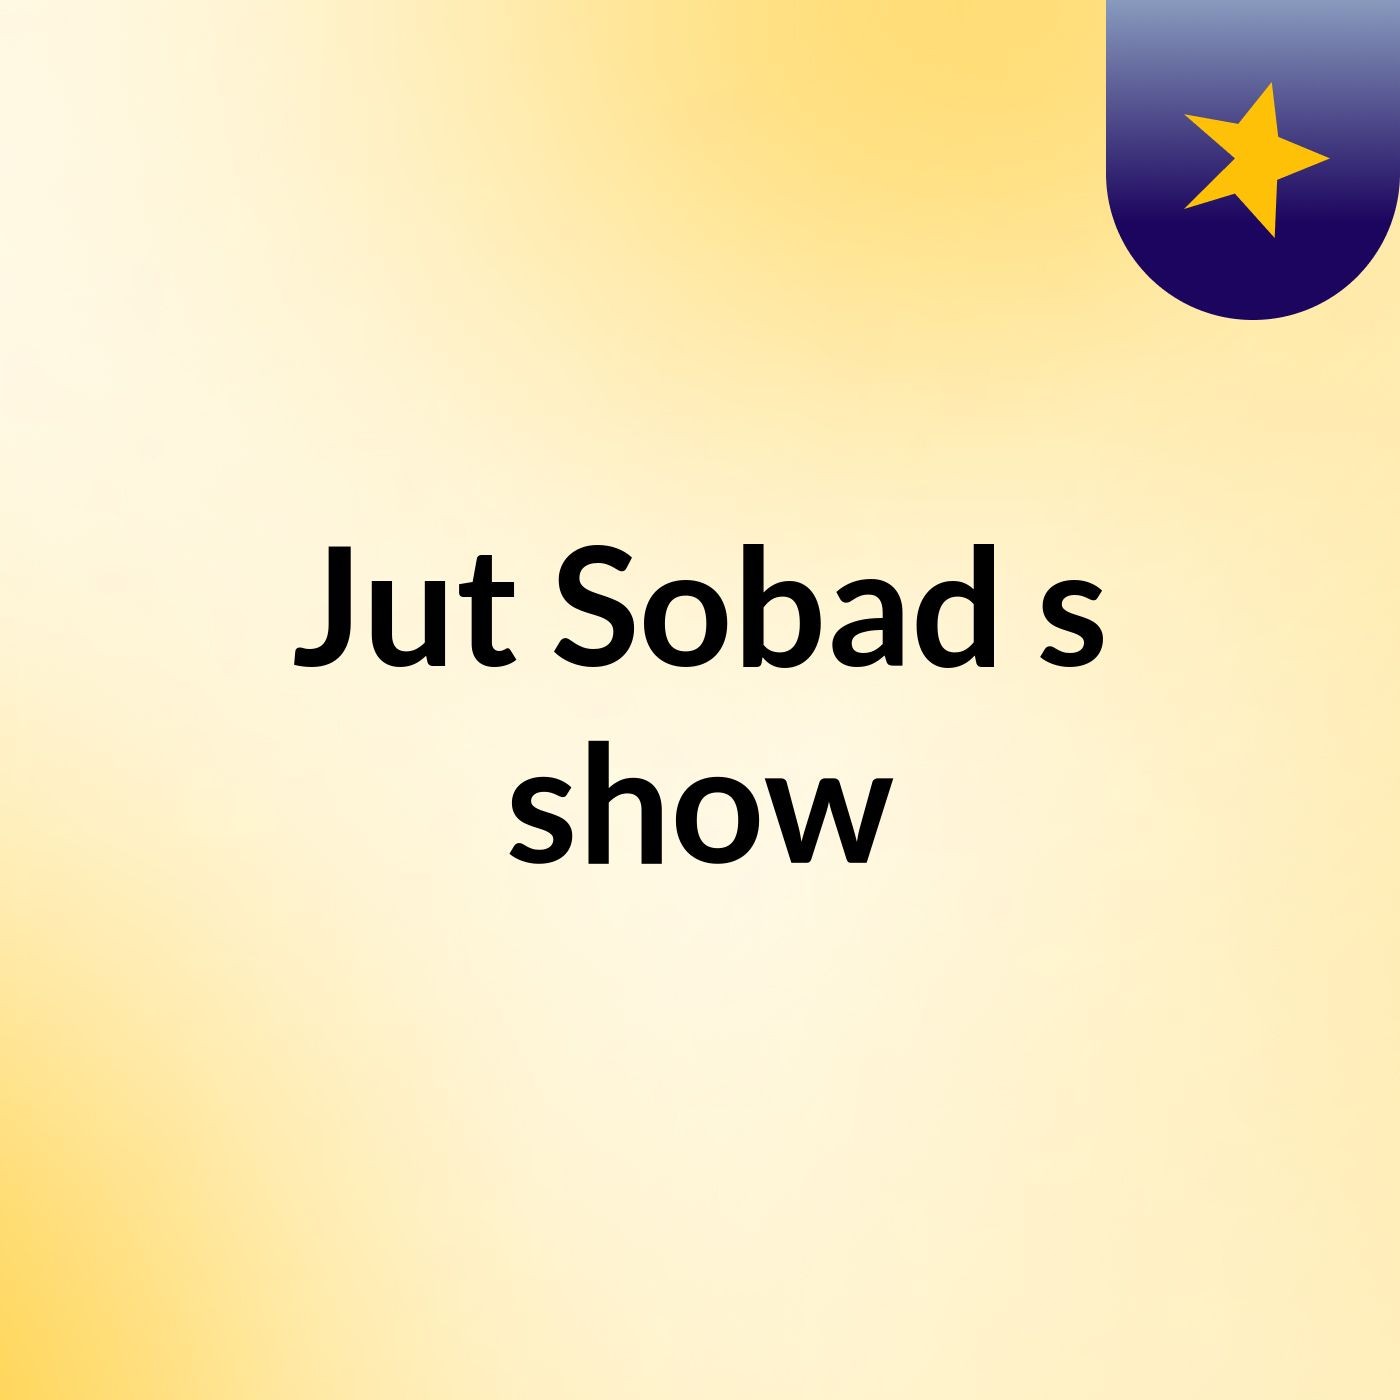 Jut Sobad's show